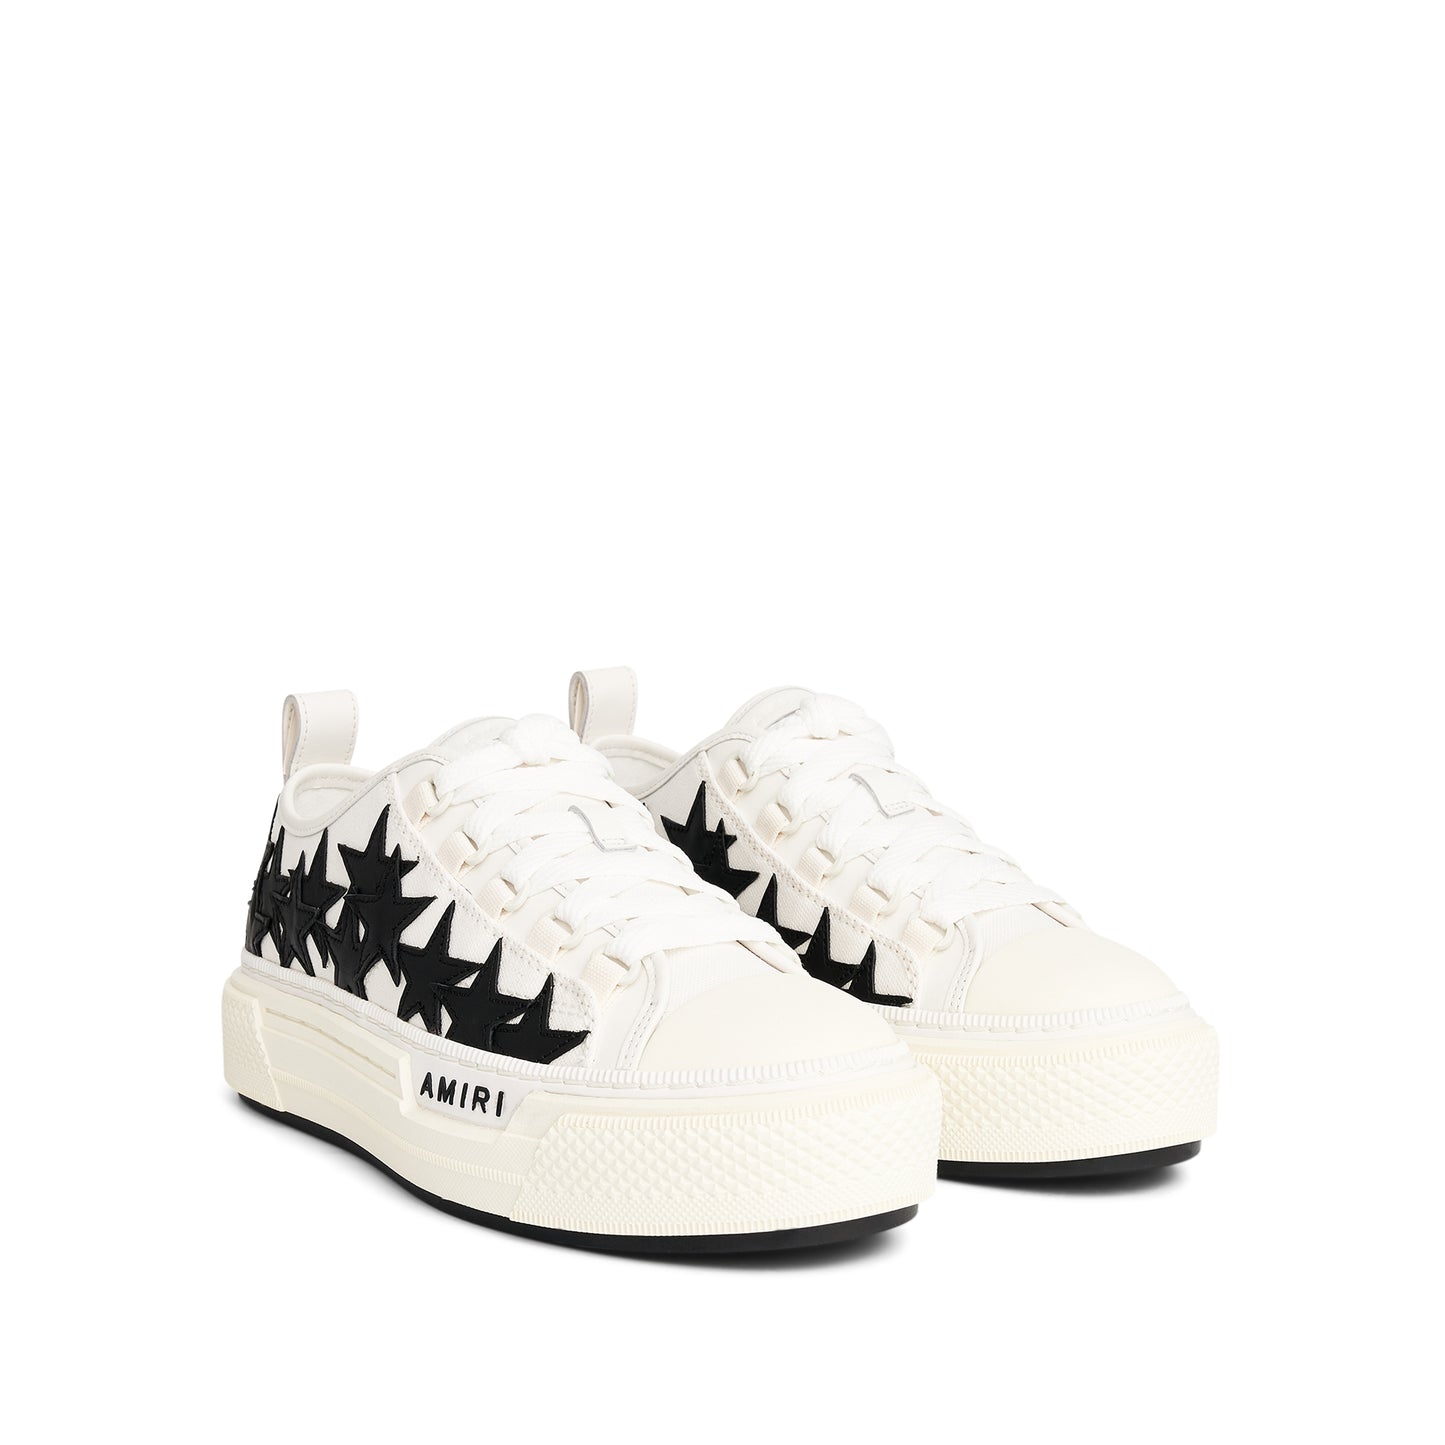 Stars Court Low Sneaker in White/Black